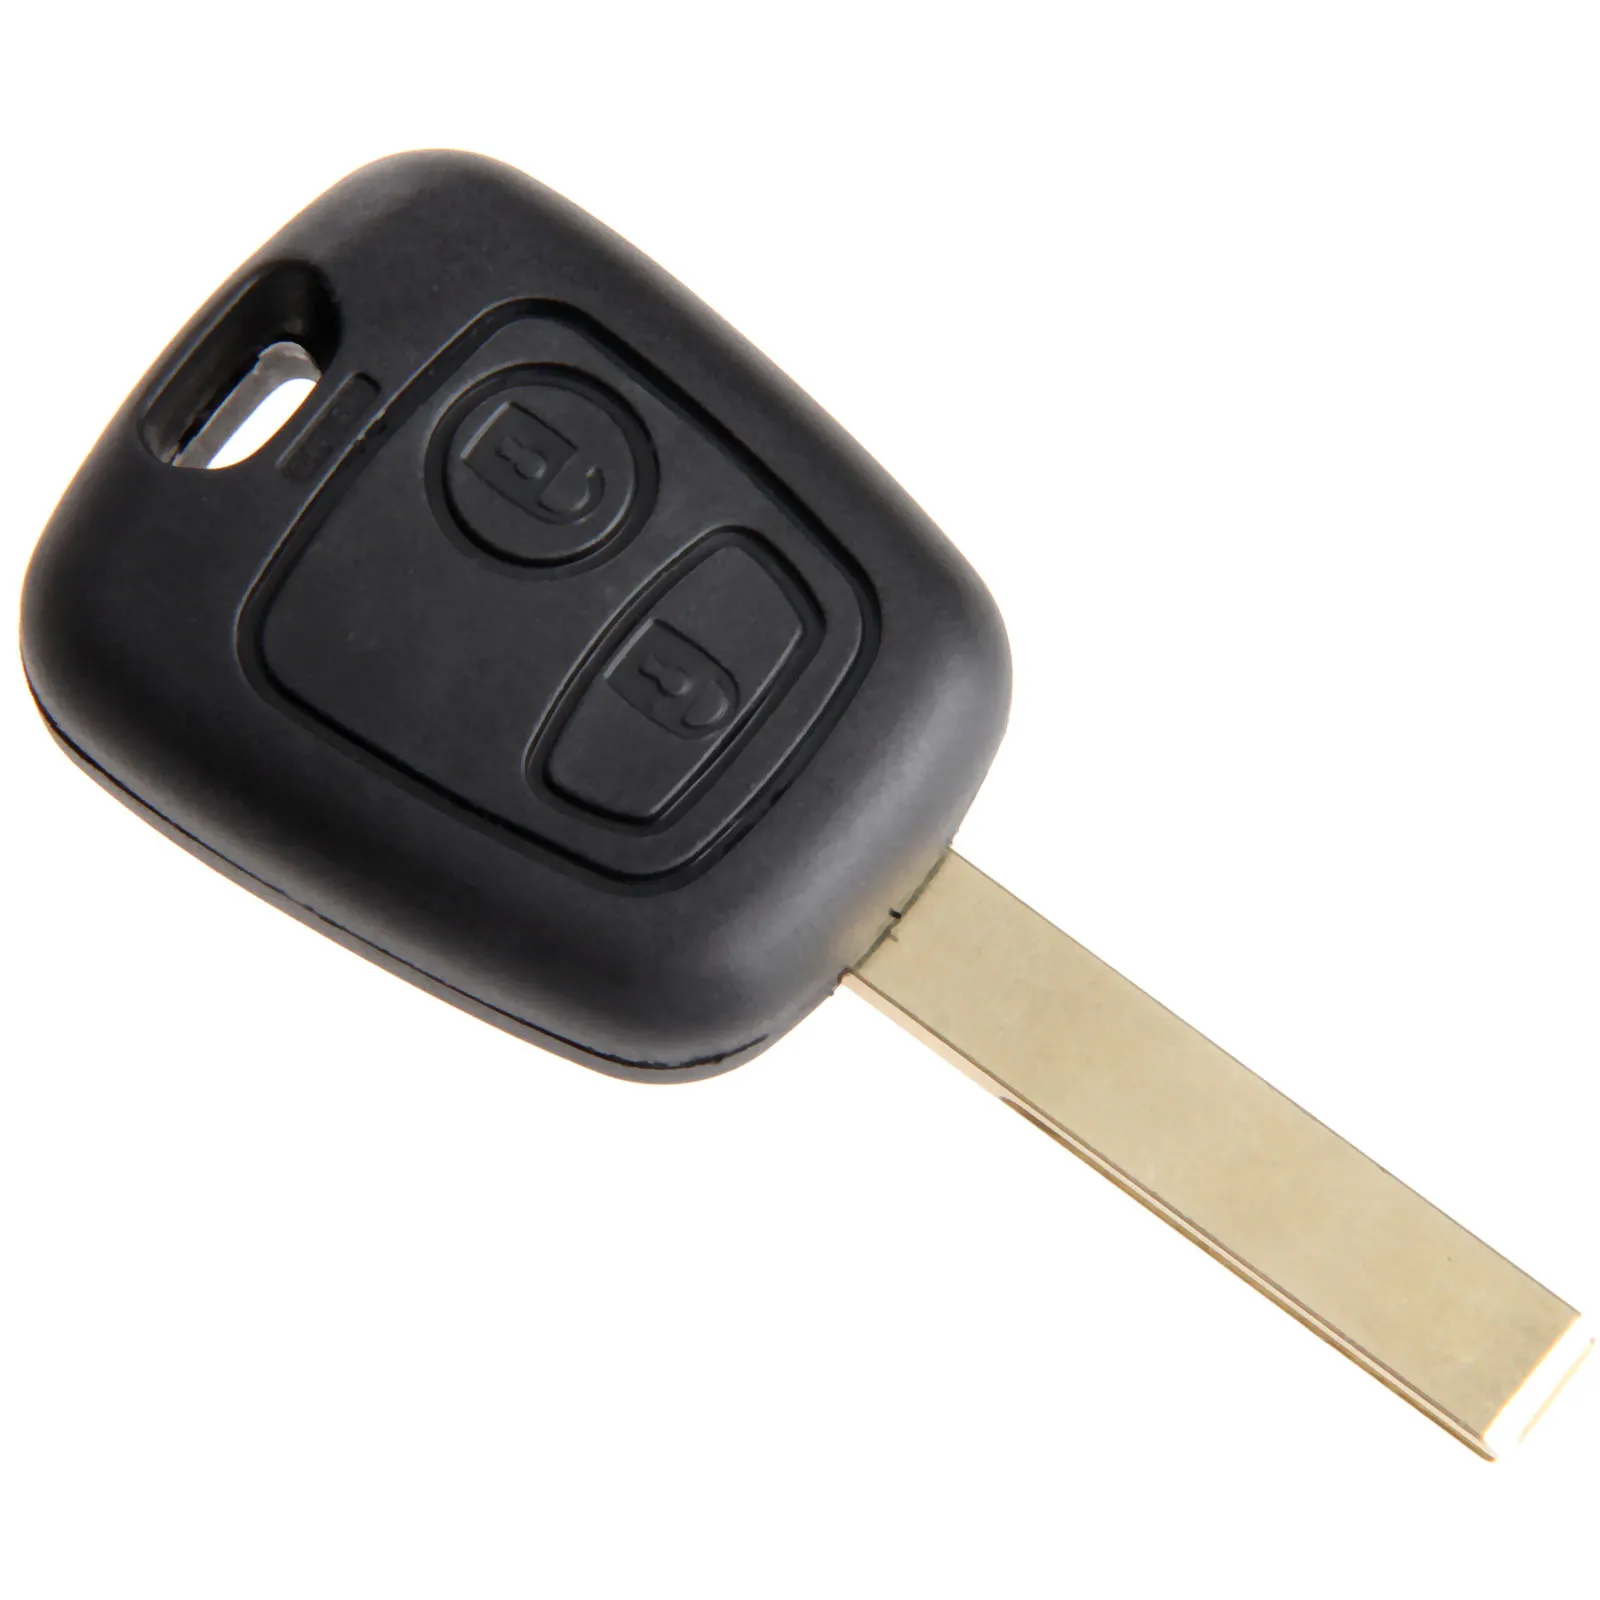 

Чехол для дистанционного ключа Peugeot 307, задний корпус для замены лезвия без аккумулятора, 2 кнопки для Peugeot 107, 207, 307, 407, 607,1007 C2